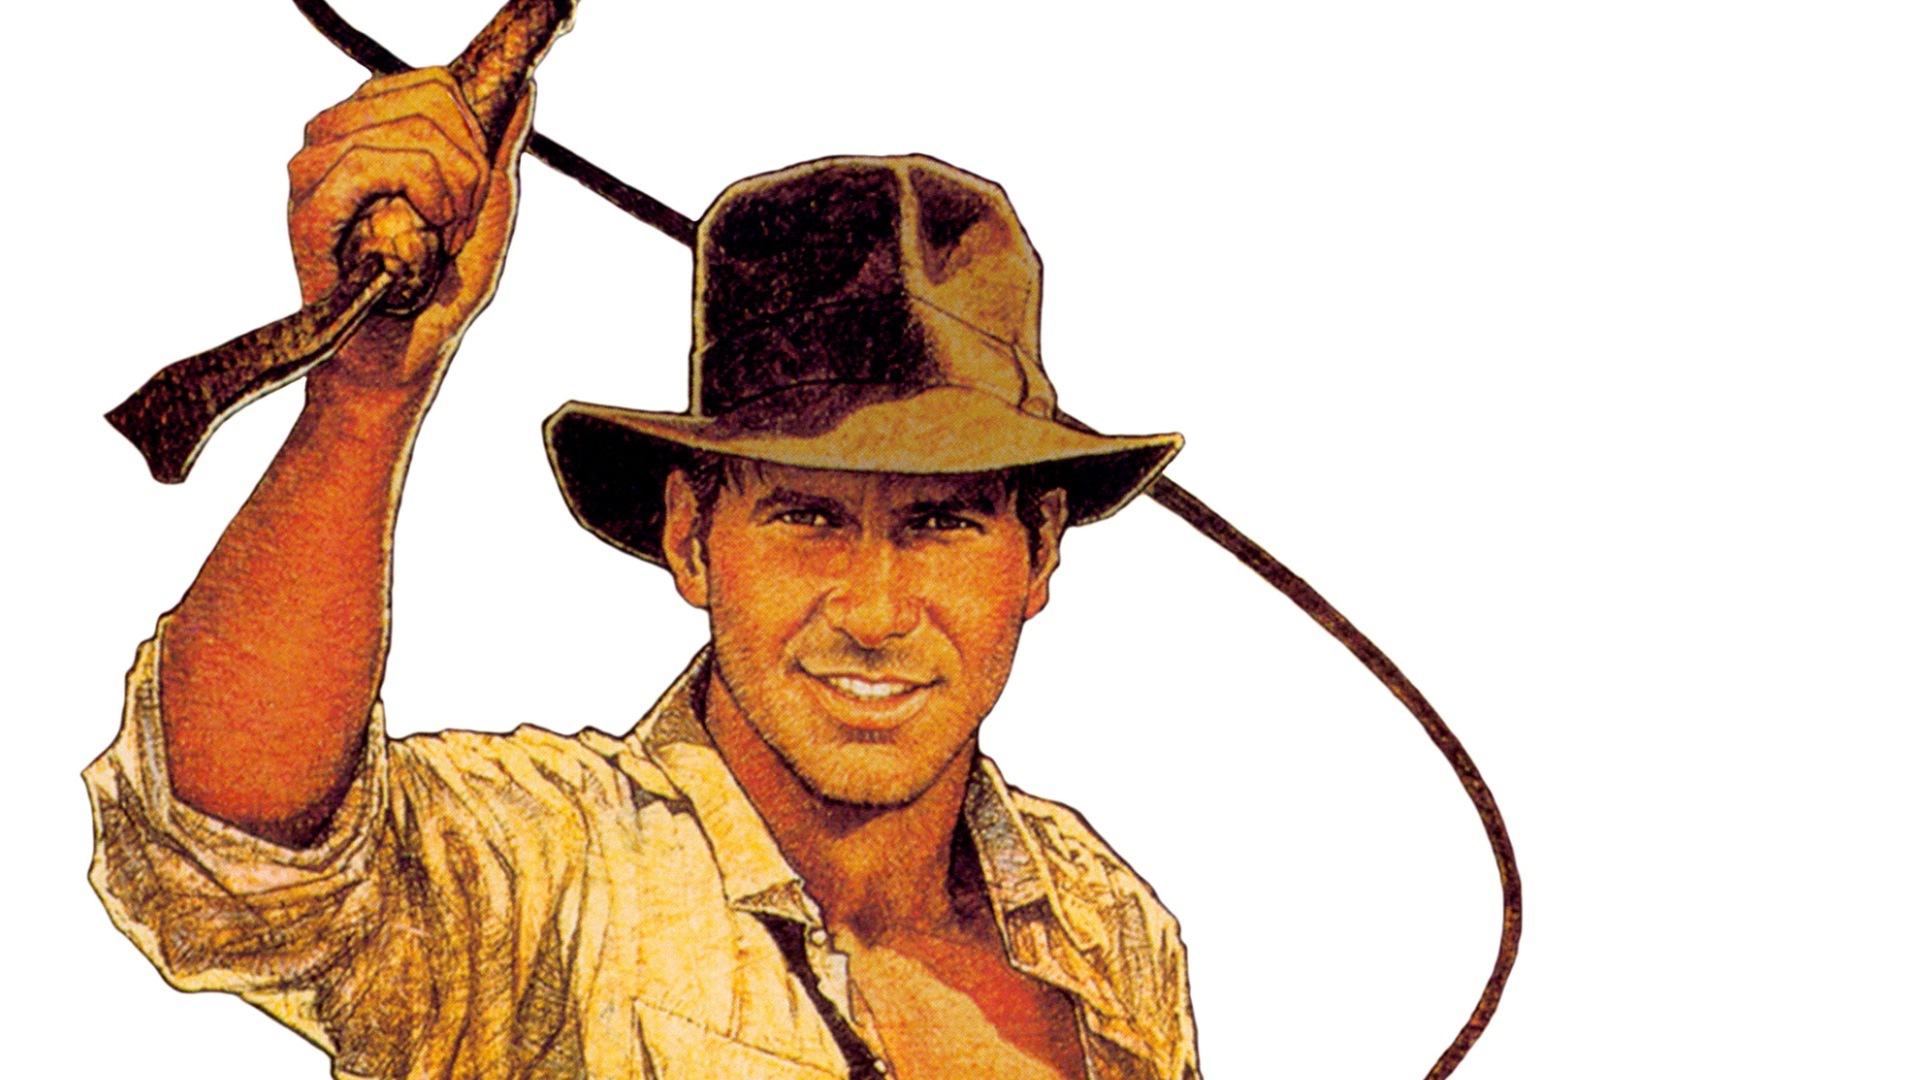 Indiana Jones Backgrounds, Compatible - PC, Mobile, Gadgets| 1920x1080 px